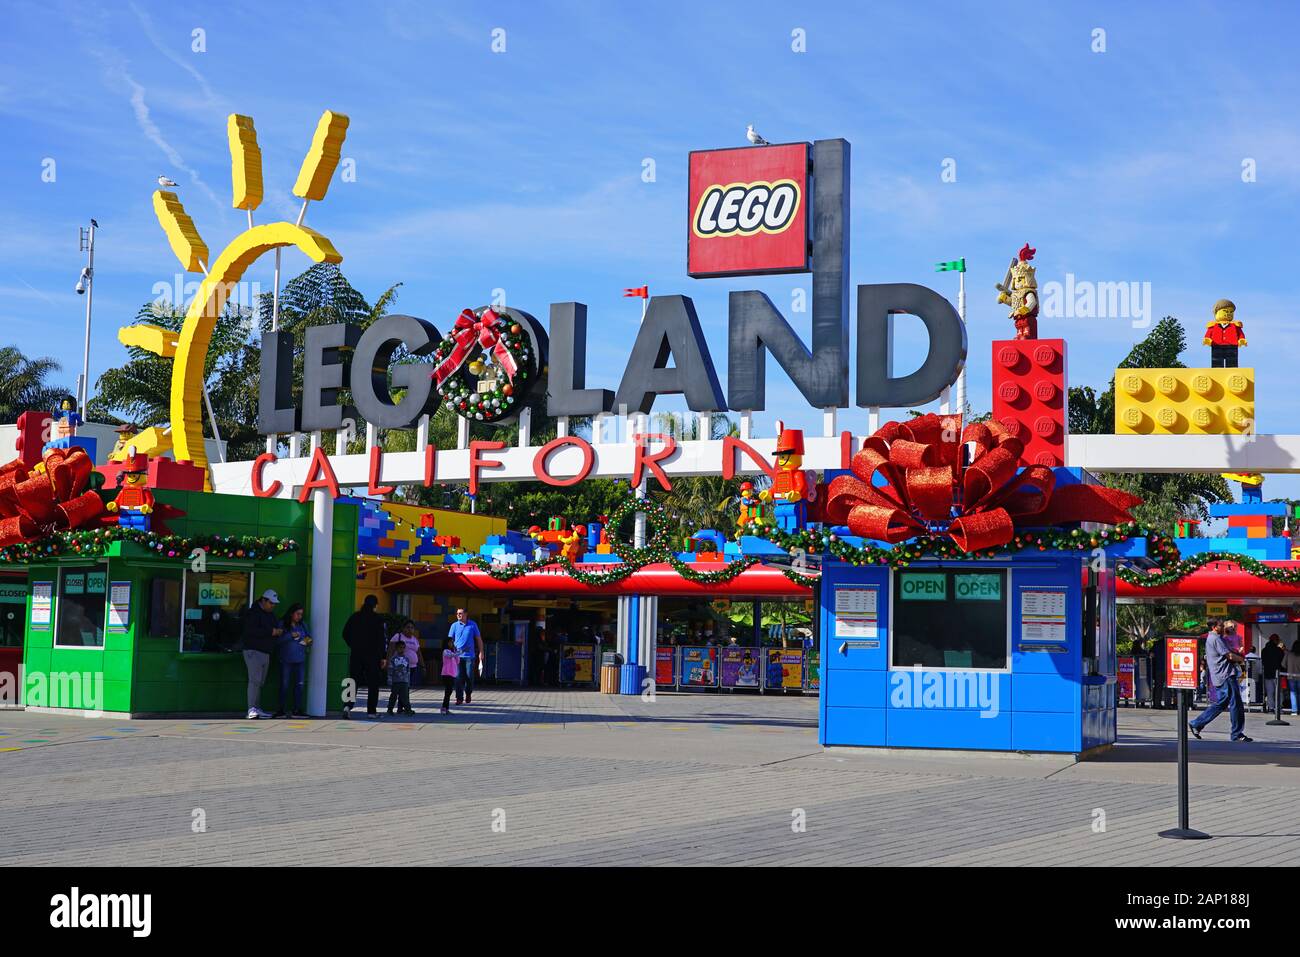 Carlsbad Ca 4 Jan 2020 View Of The Entrance Of Legoland California